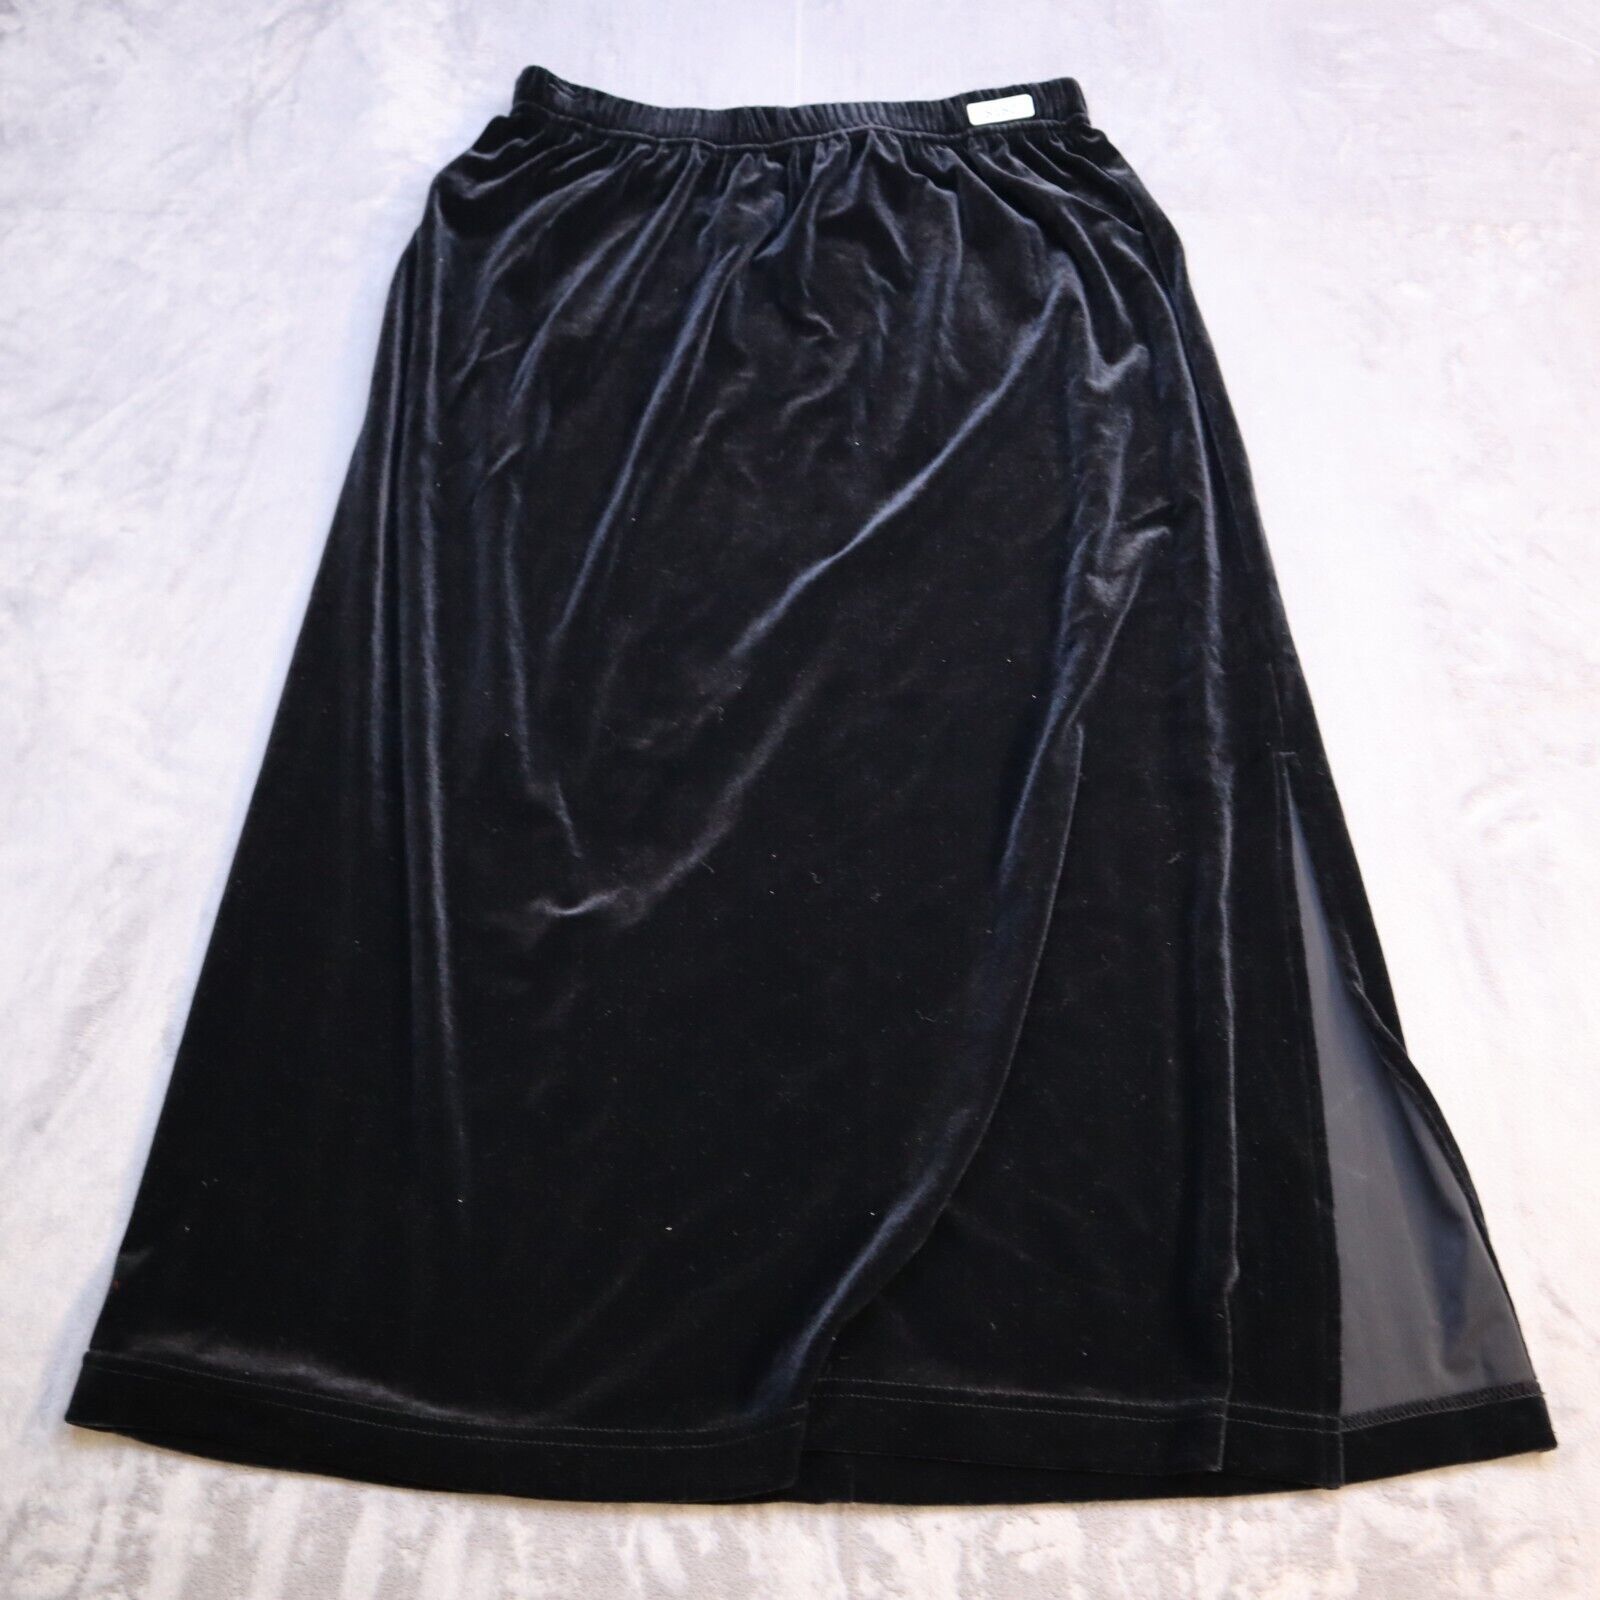 Primary image for Sag Harbor Maxi Skirt Adult Petite Medium Black Velour Elastic Waist Womens